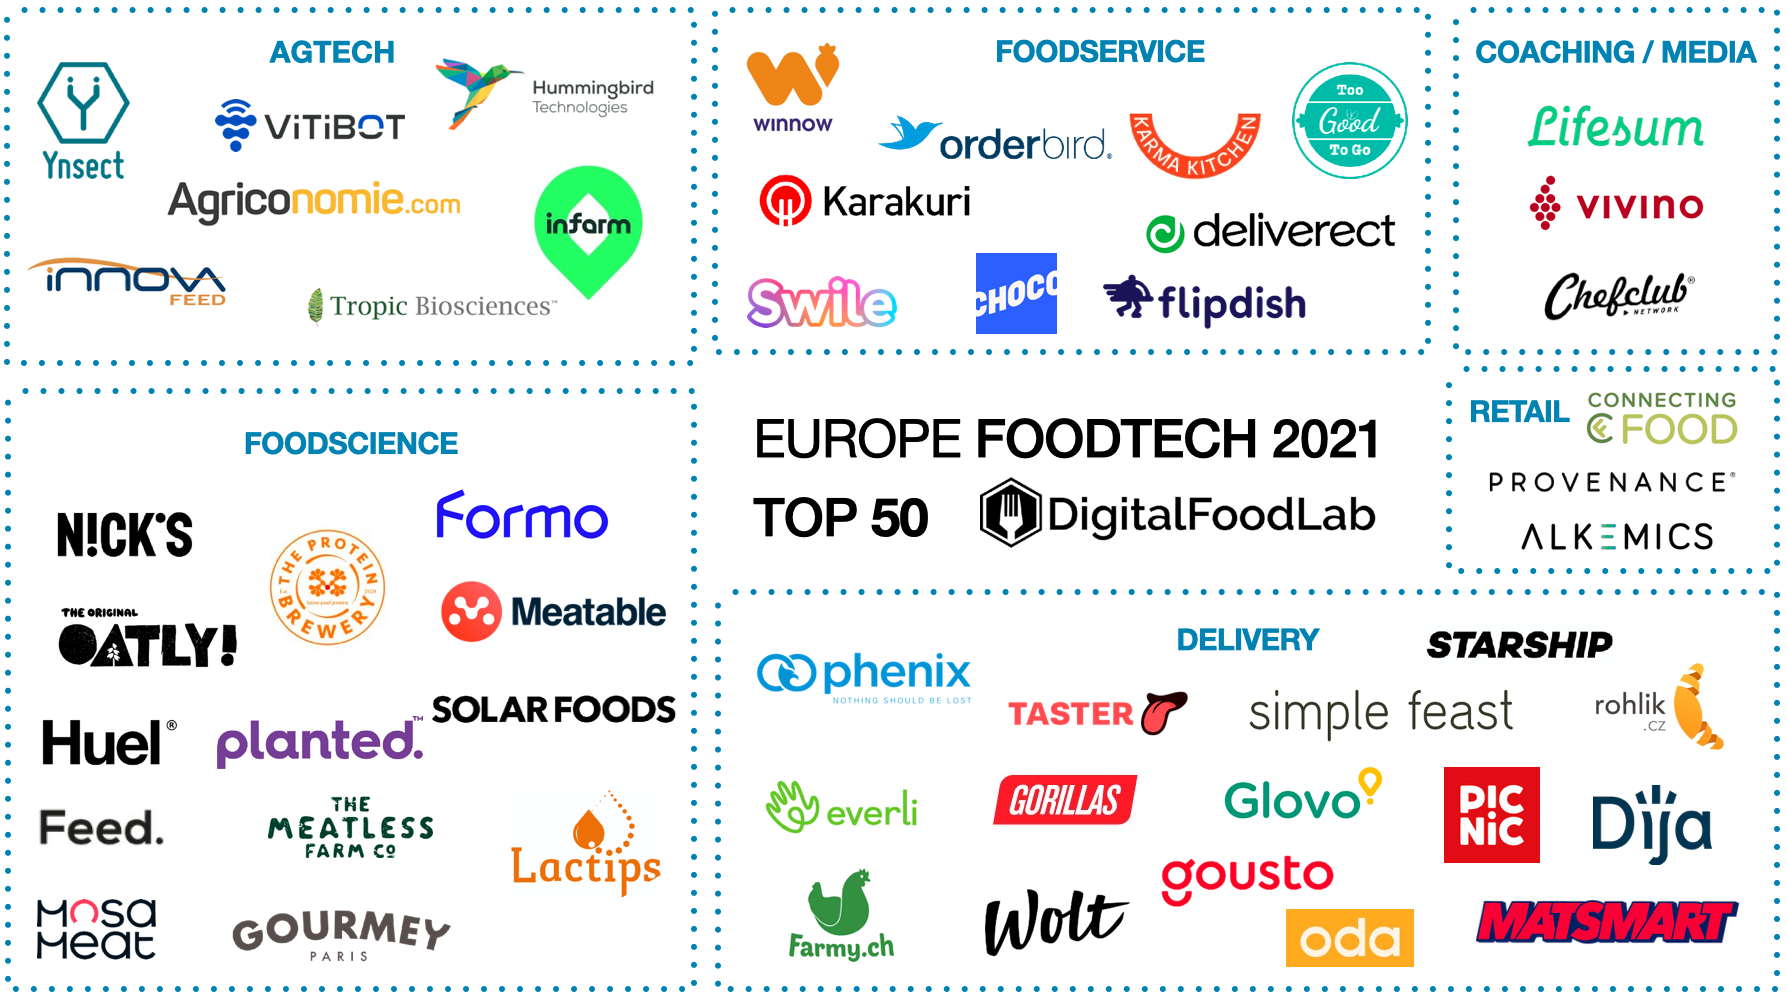 European FoodTech Top50 2021 DigitalFoodLab